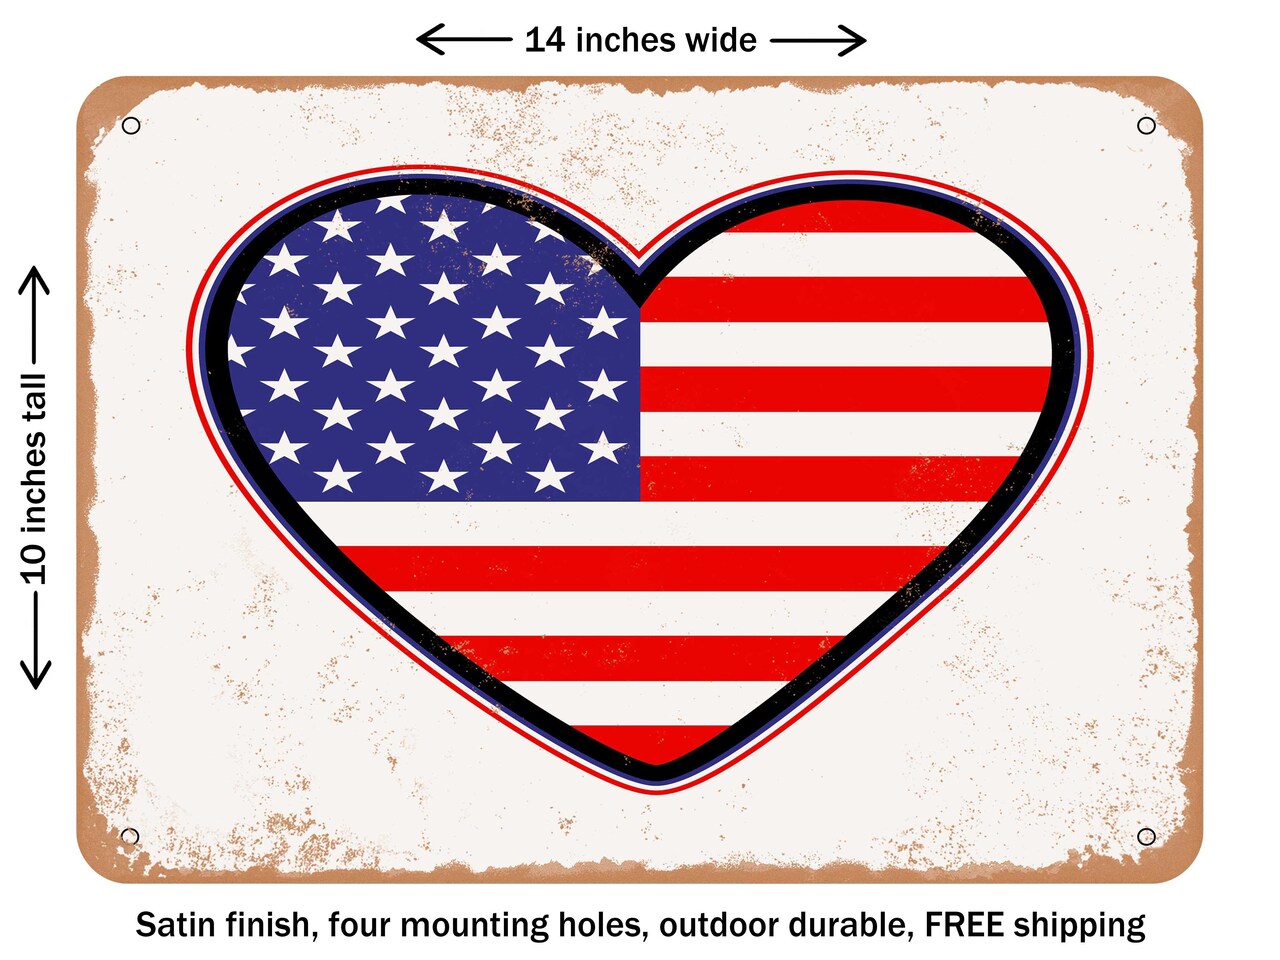 DECORATIVE METAL SIGN - d Heart American Flag - Vintage Rusty Look